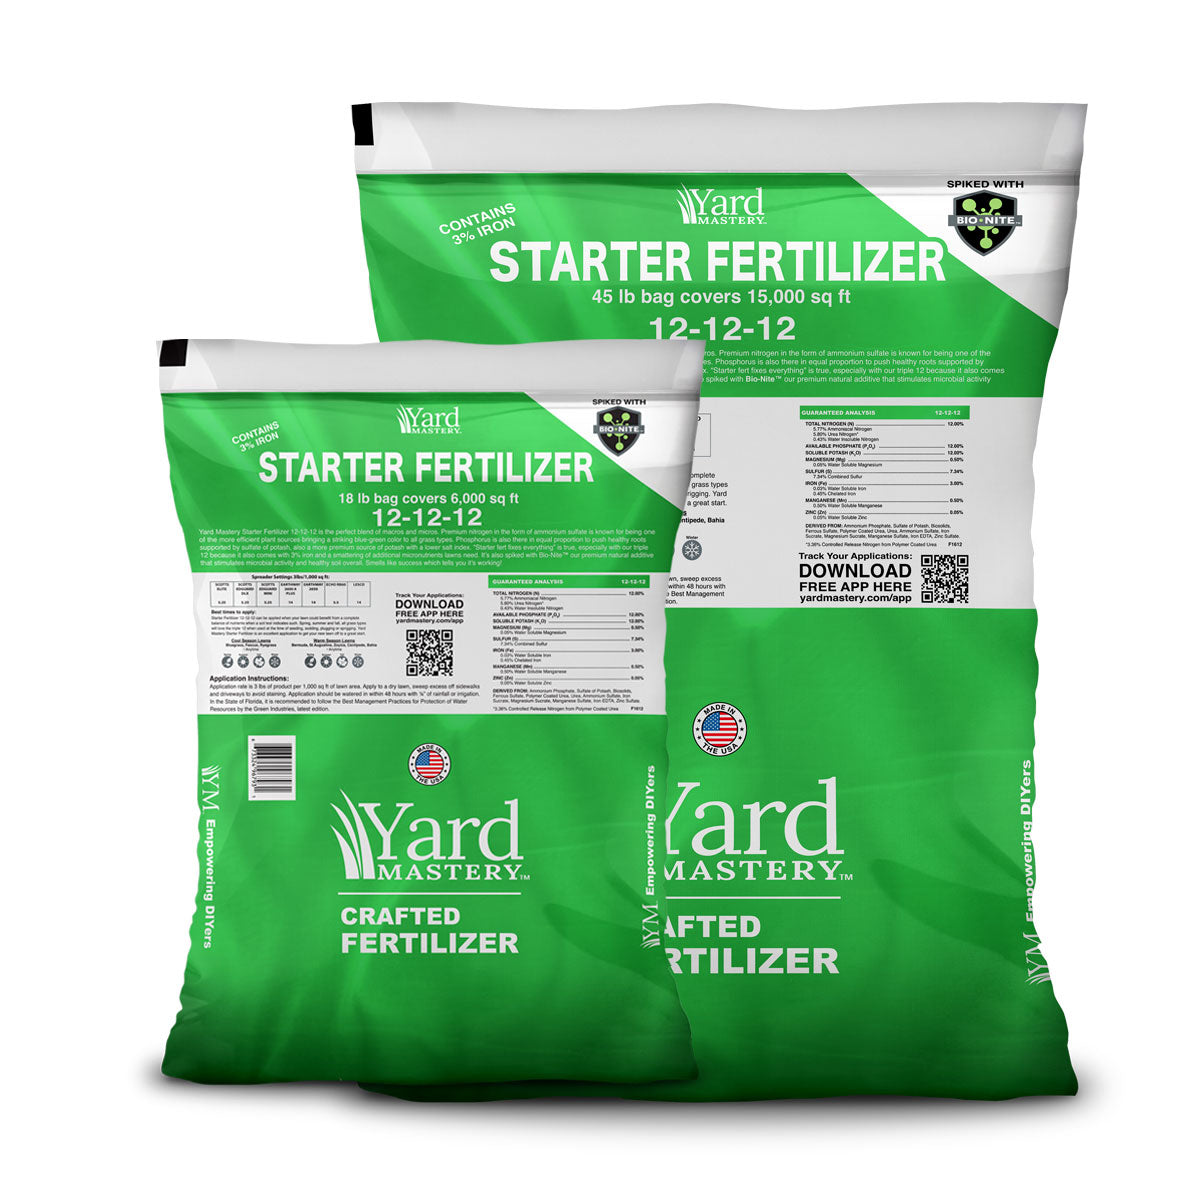 12-12-12 Starter Fertilizer 3% Iron - Bio-Nite - Granular Lawn Fertilizer